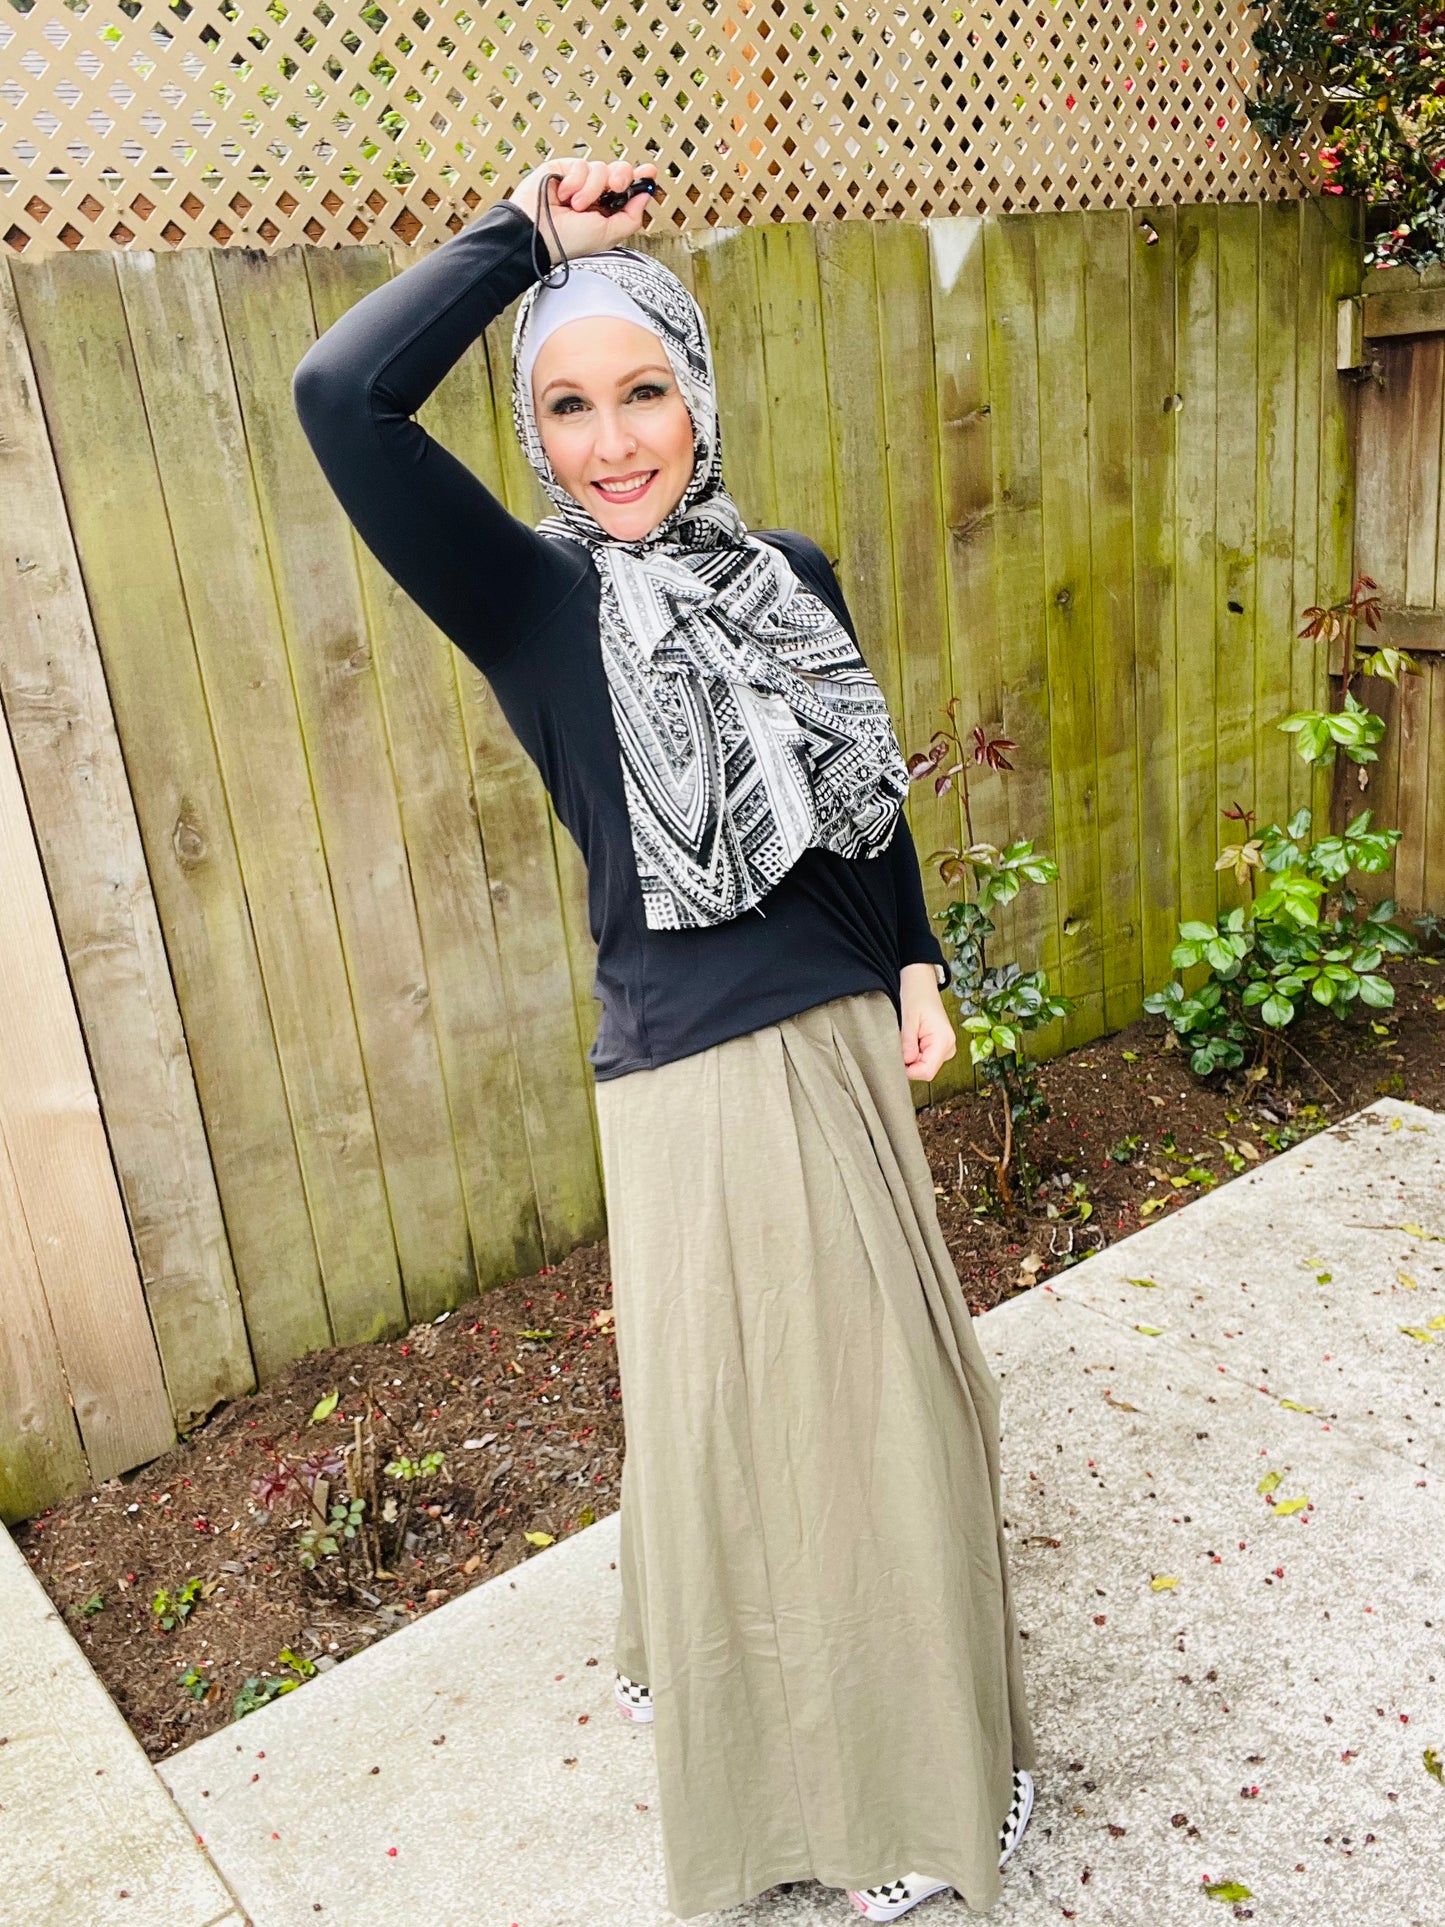 Limited Edition Crinkle Chiffon Hijab: Bold Black & White Chevrons